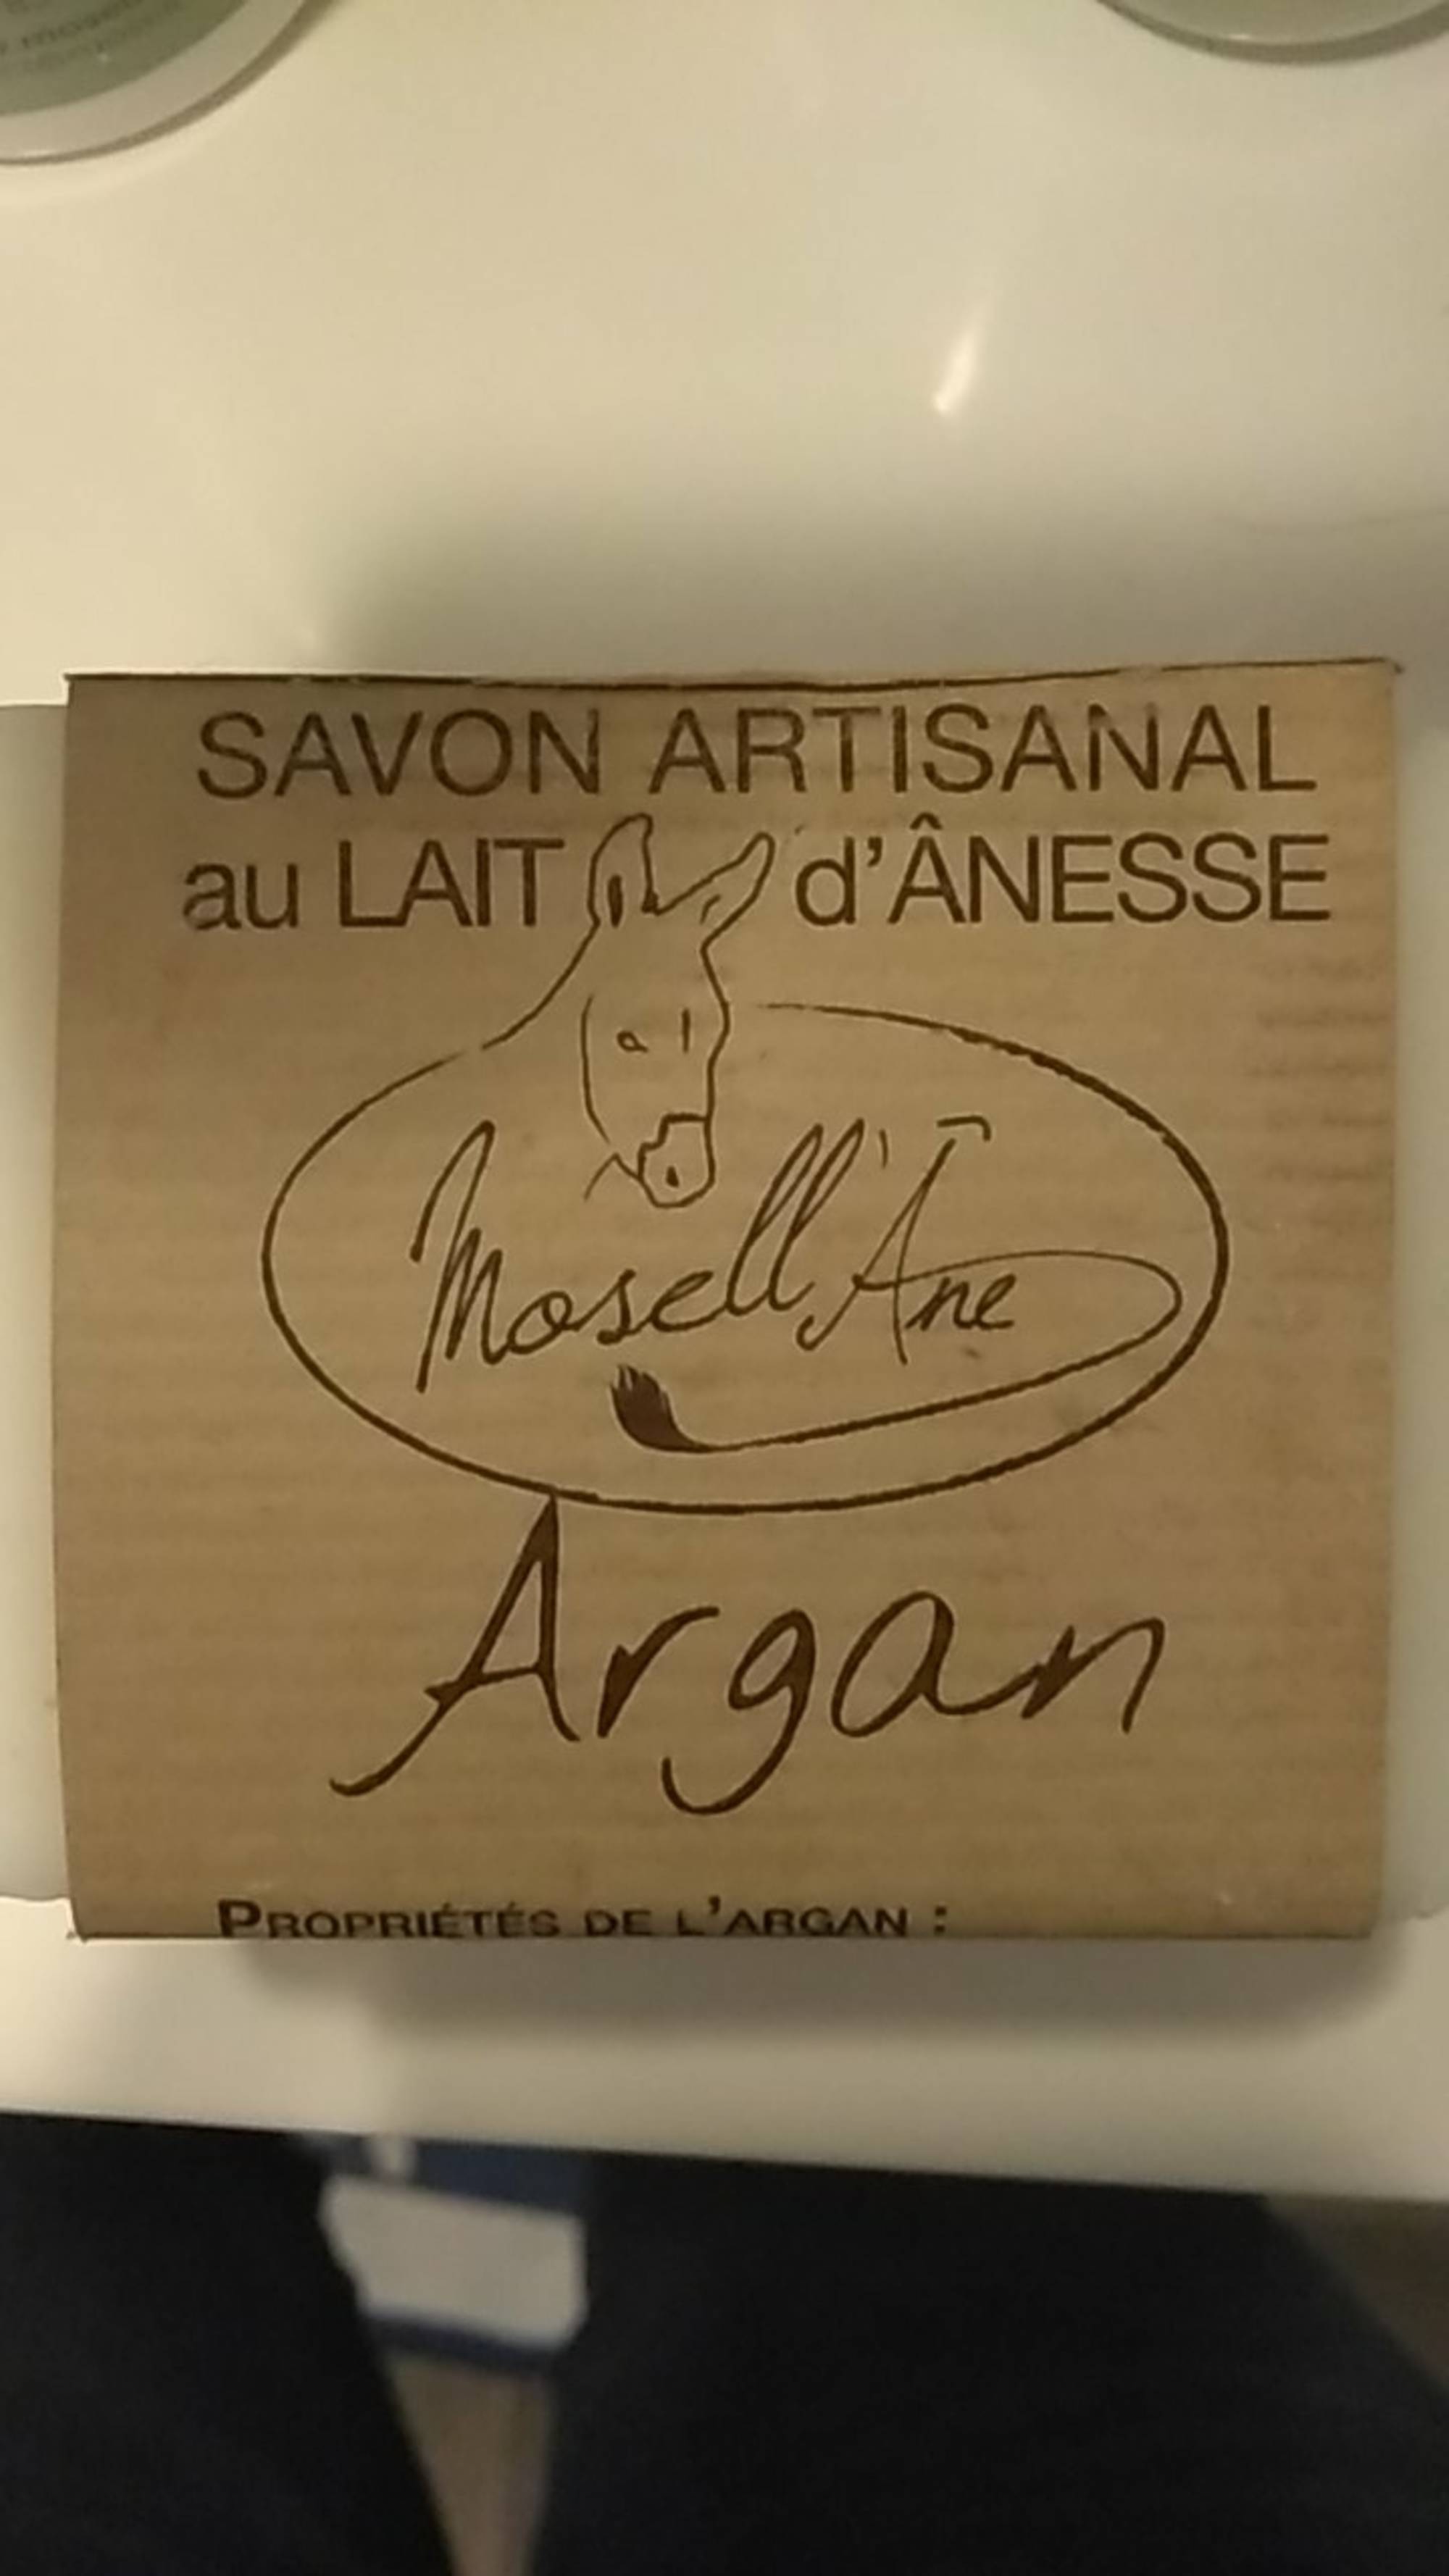 MOSELL'ÂNE - Argan - Savon artisanal au lait d'ânesse